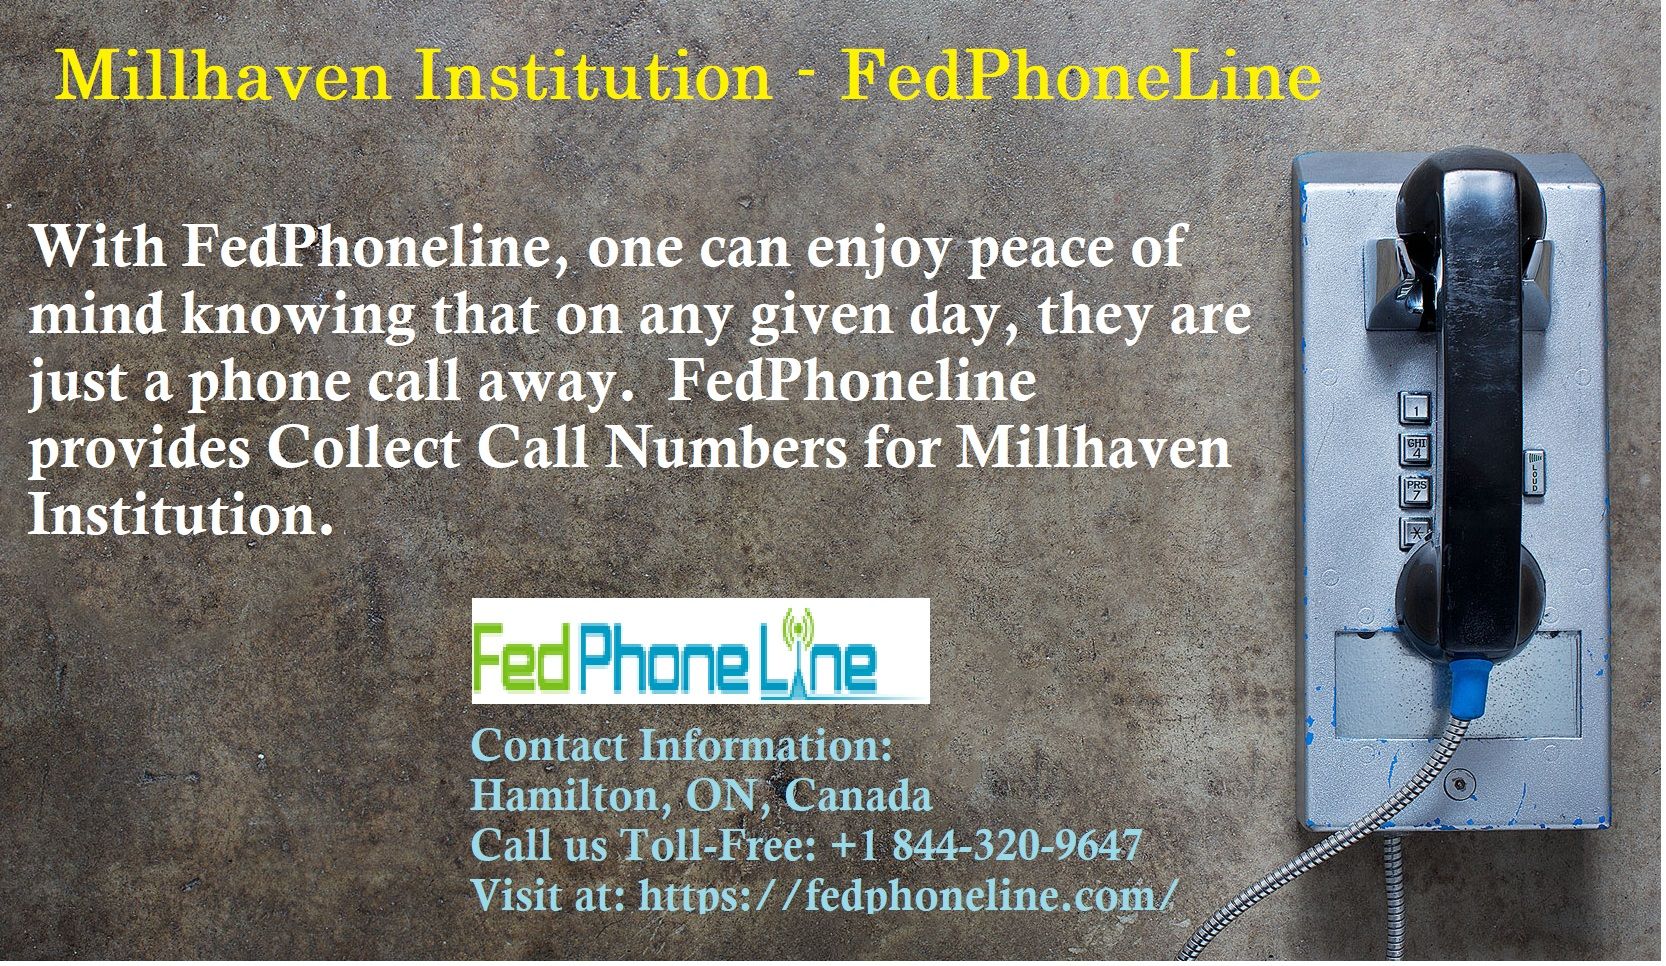 Millhaven Institution - FedPhoneLine